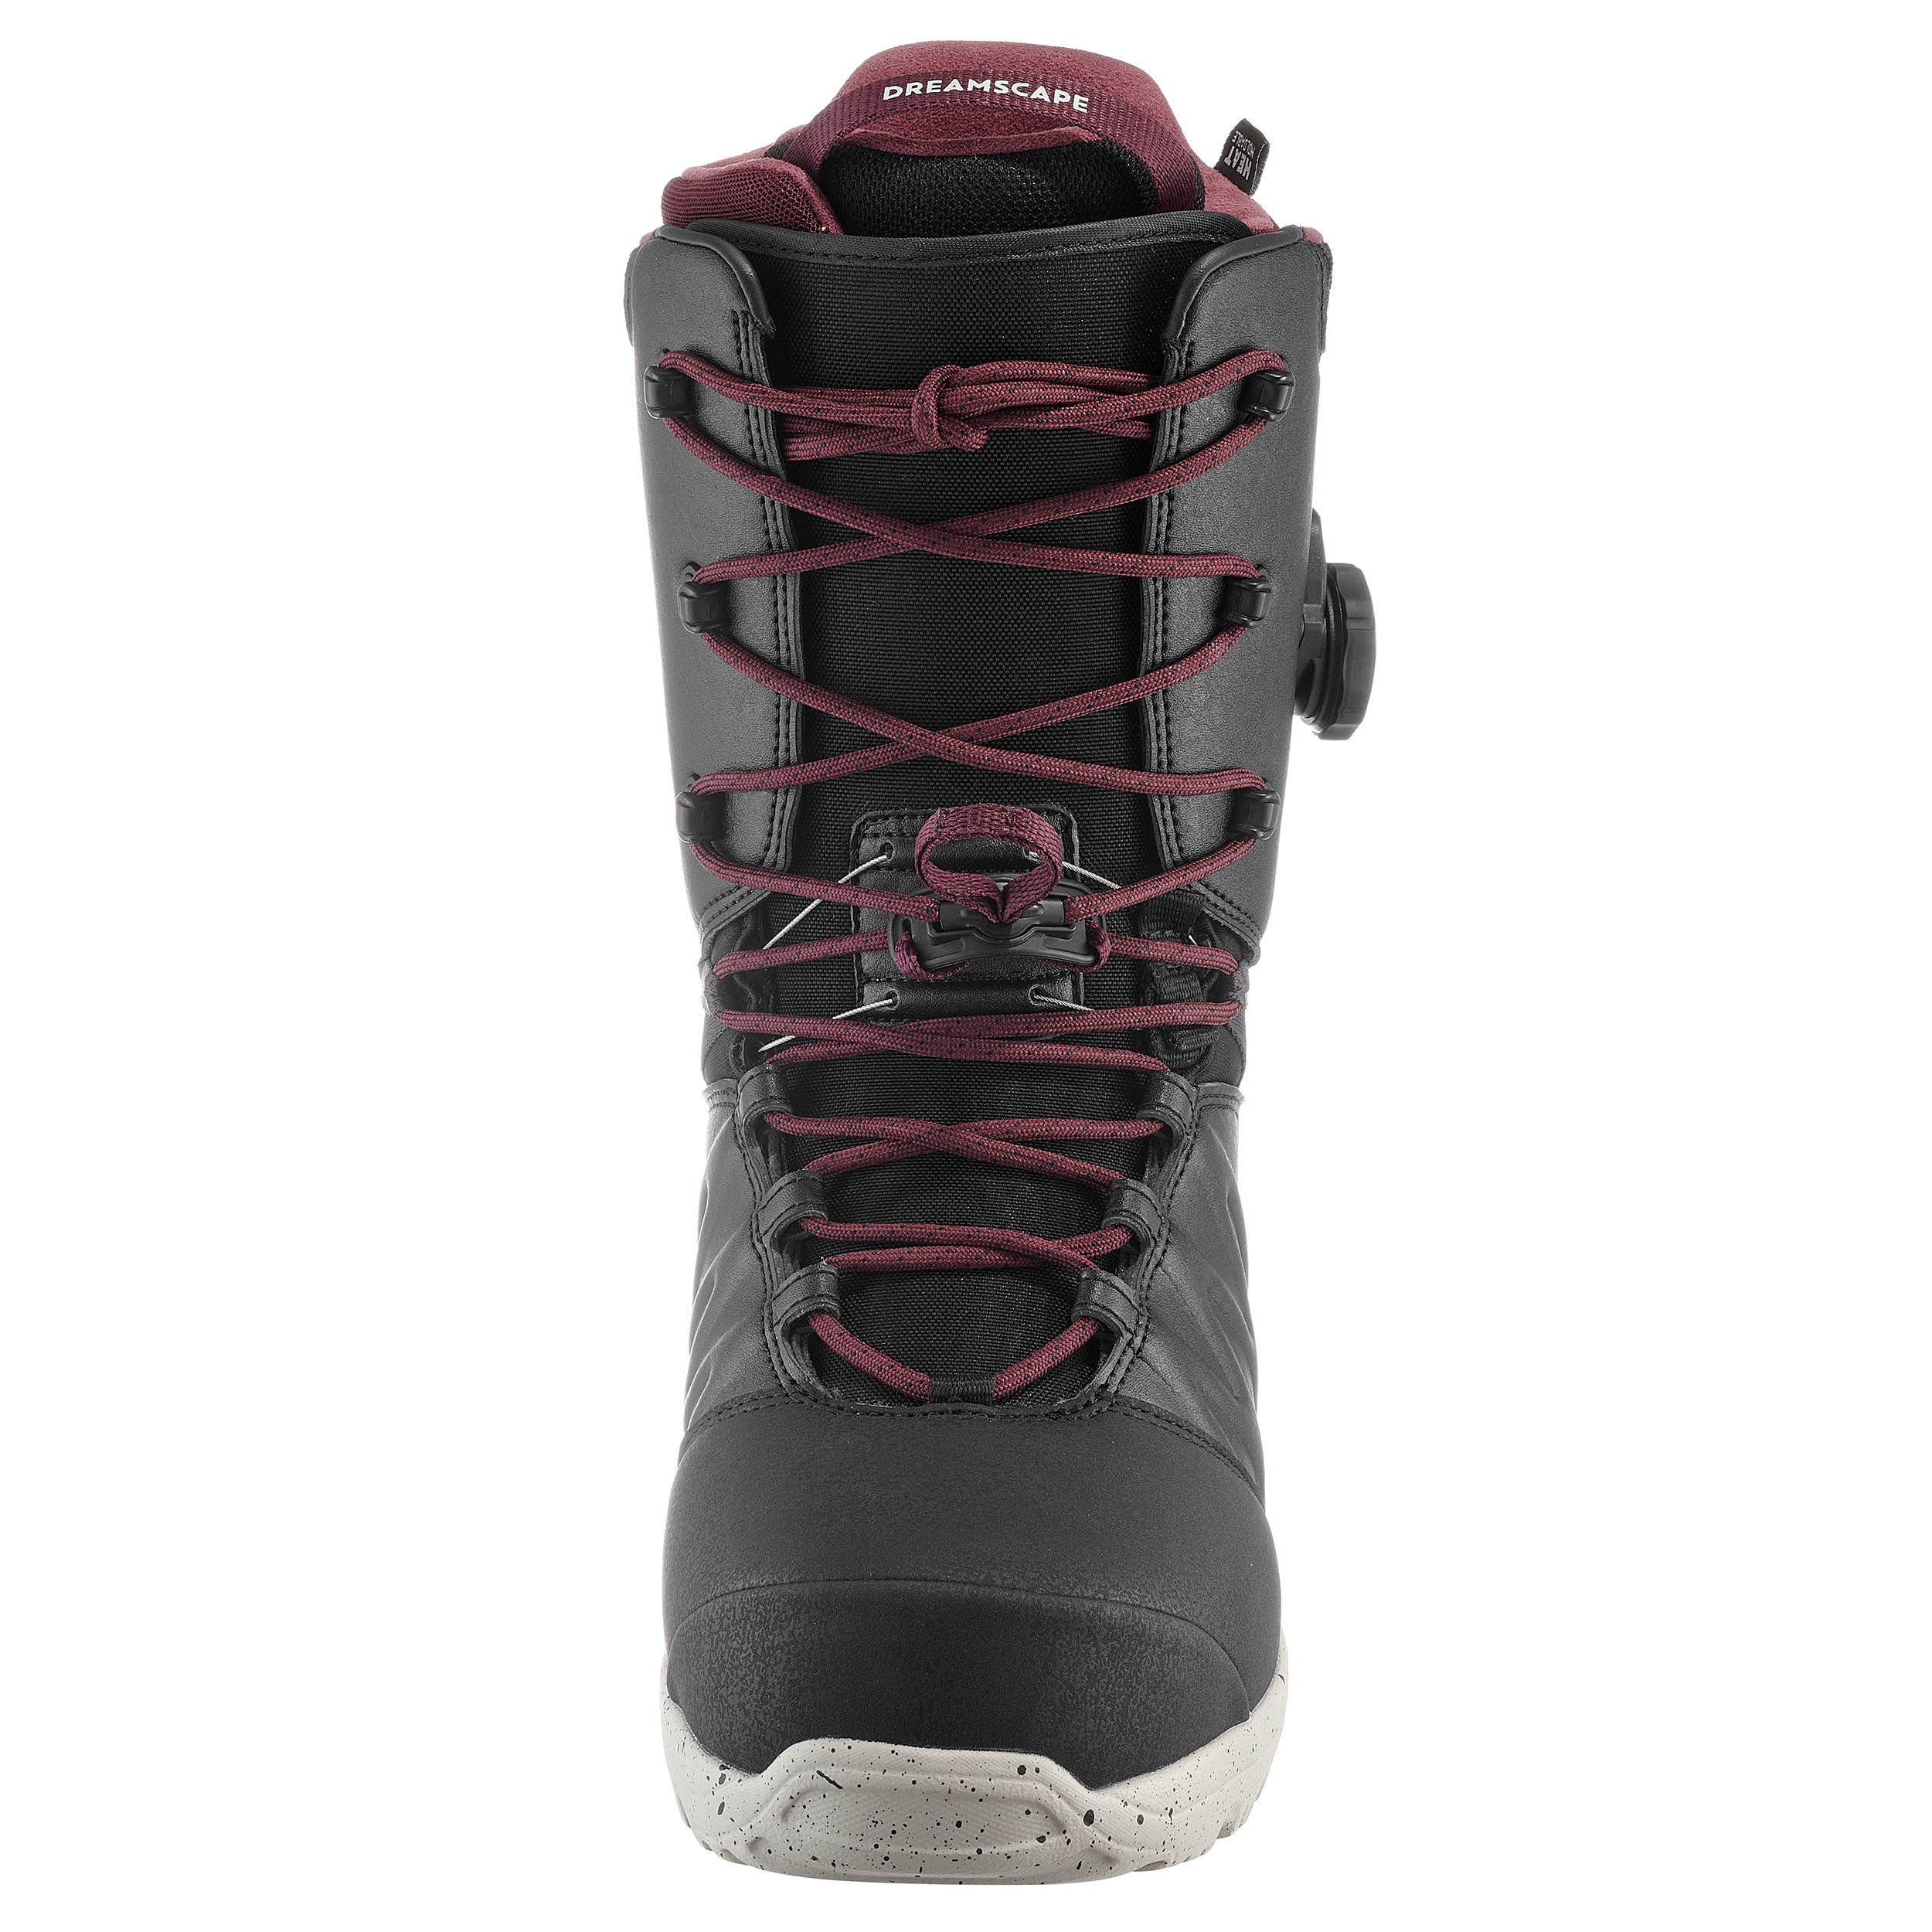 Men's Snowboard Boots FS/AM, Endzone Black 6/14